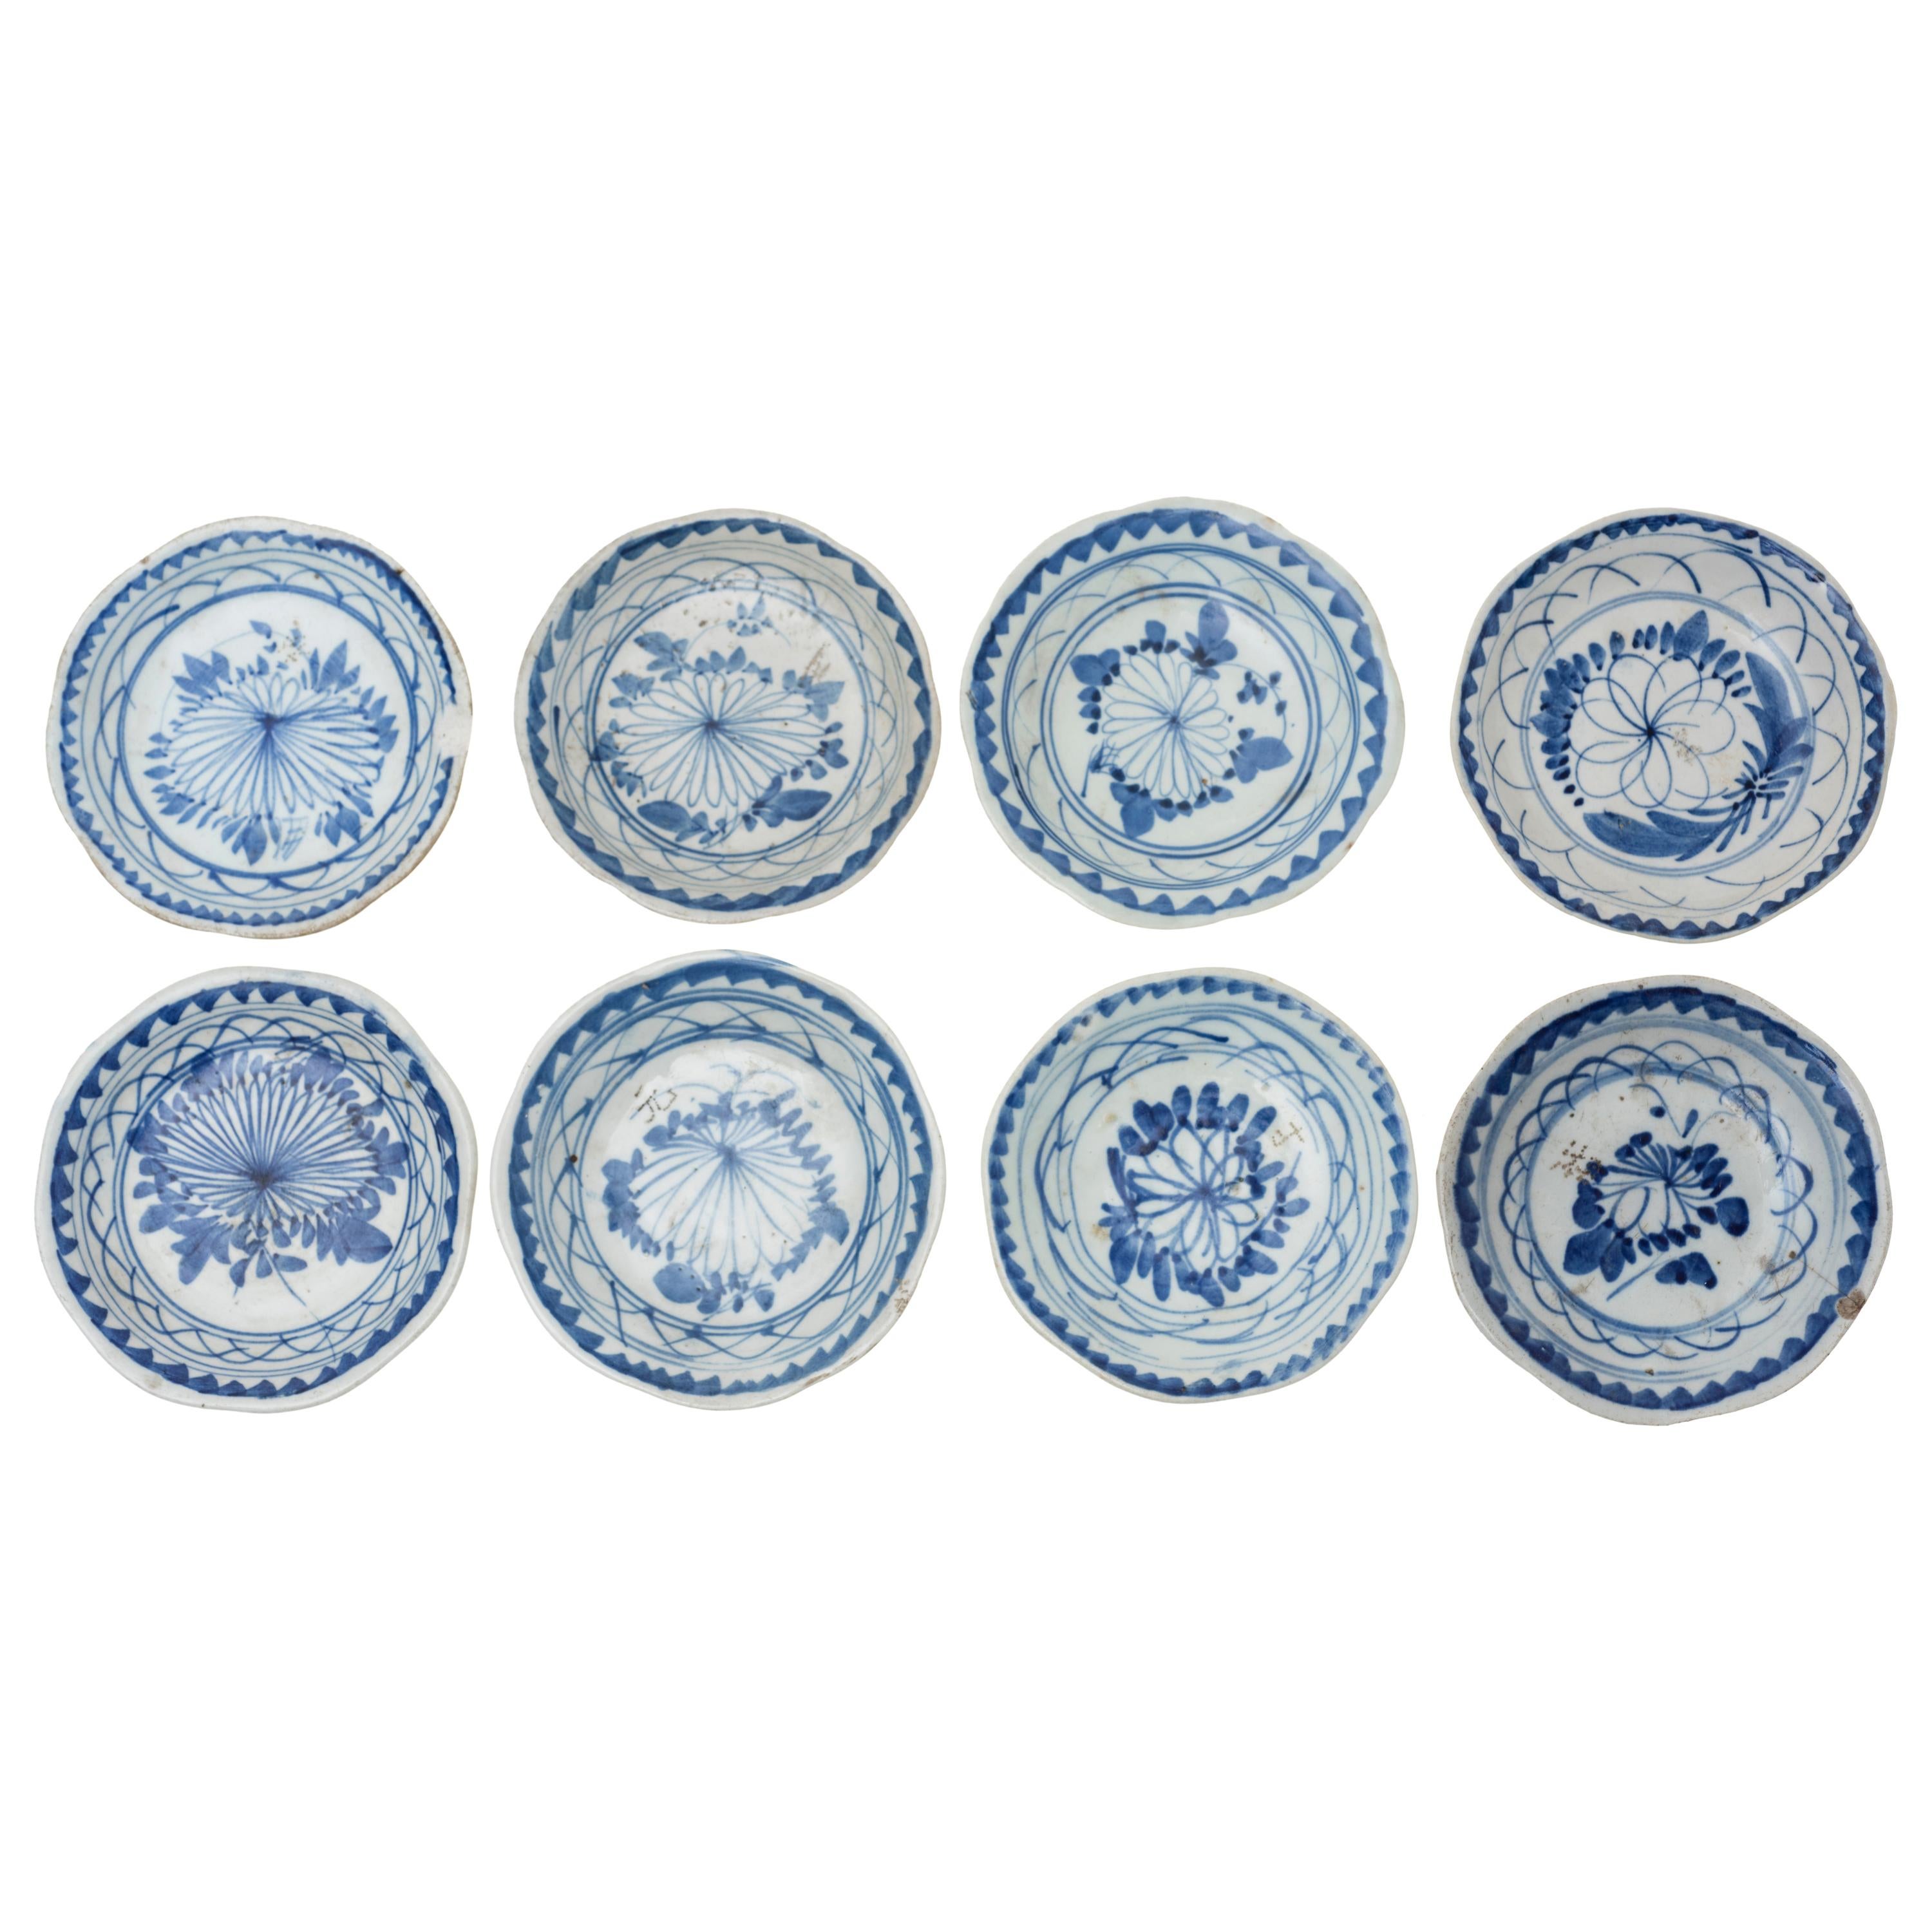 Ancient Oriental Plates Set, China, 19th Century